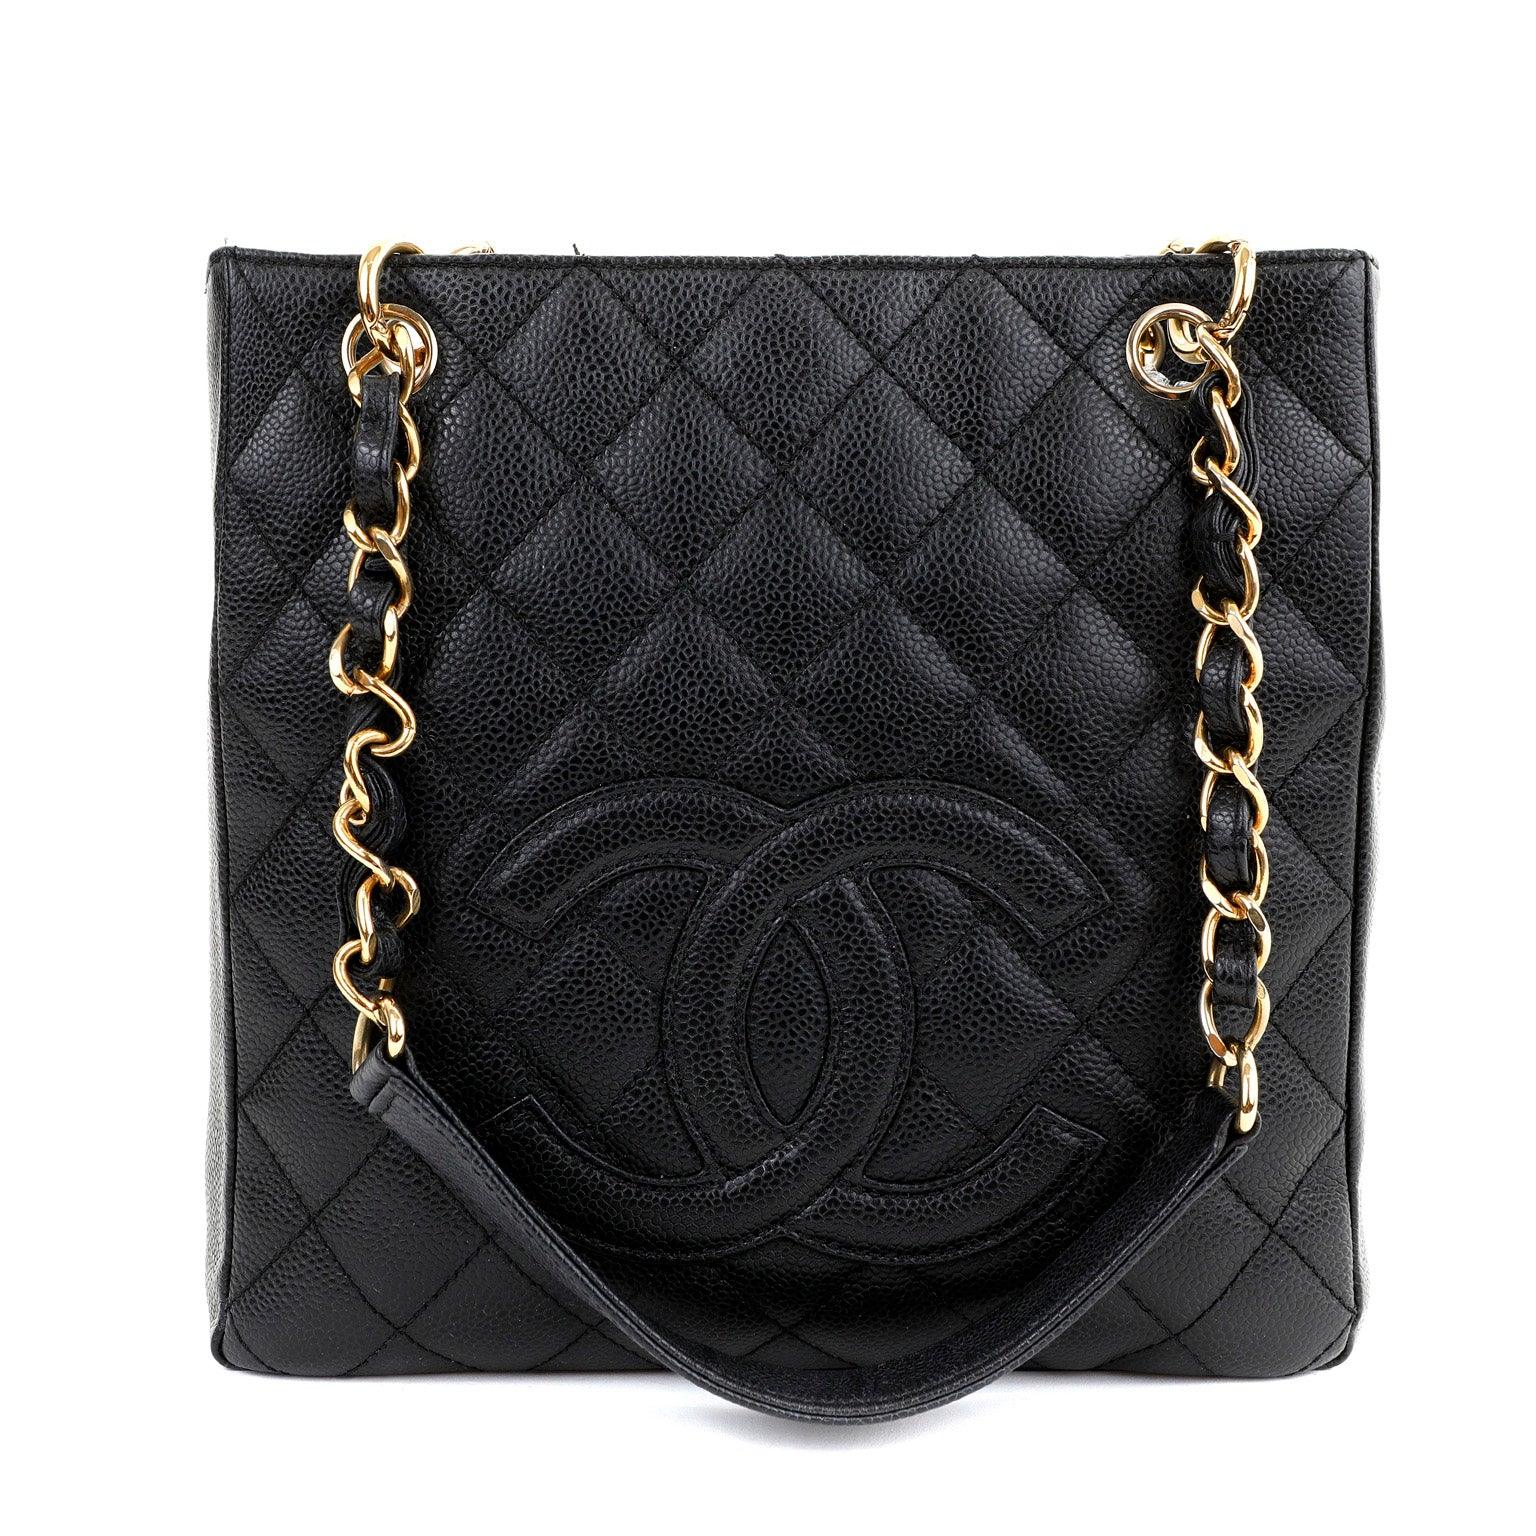 Chanel Petite Shopping Tote in Black | MTYCI